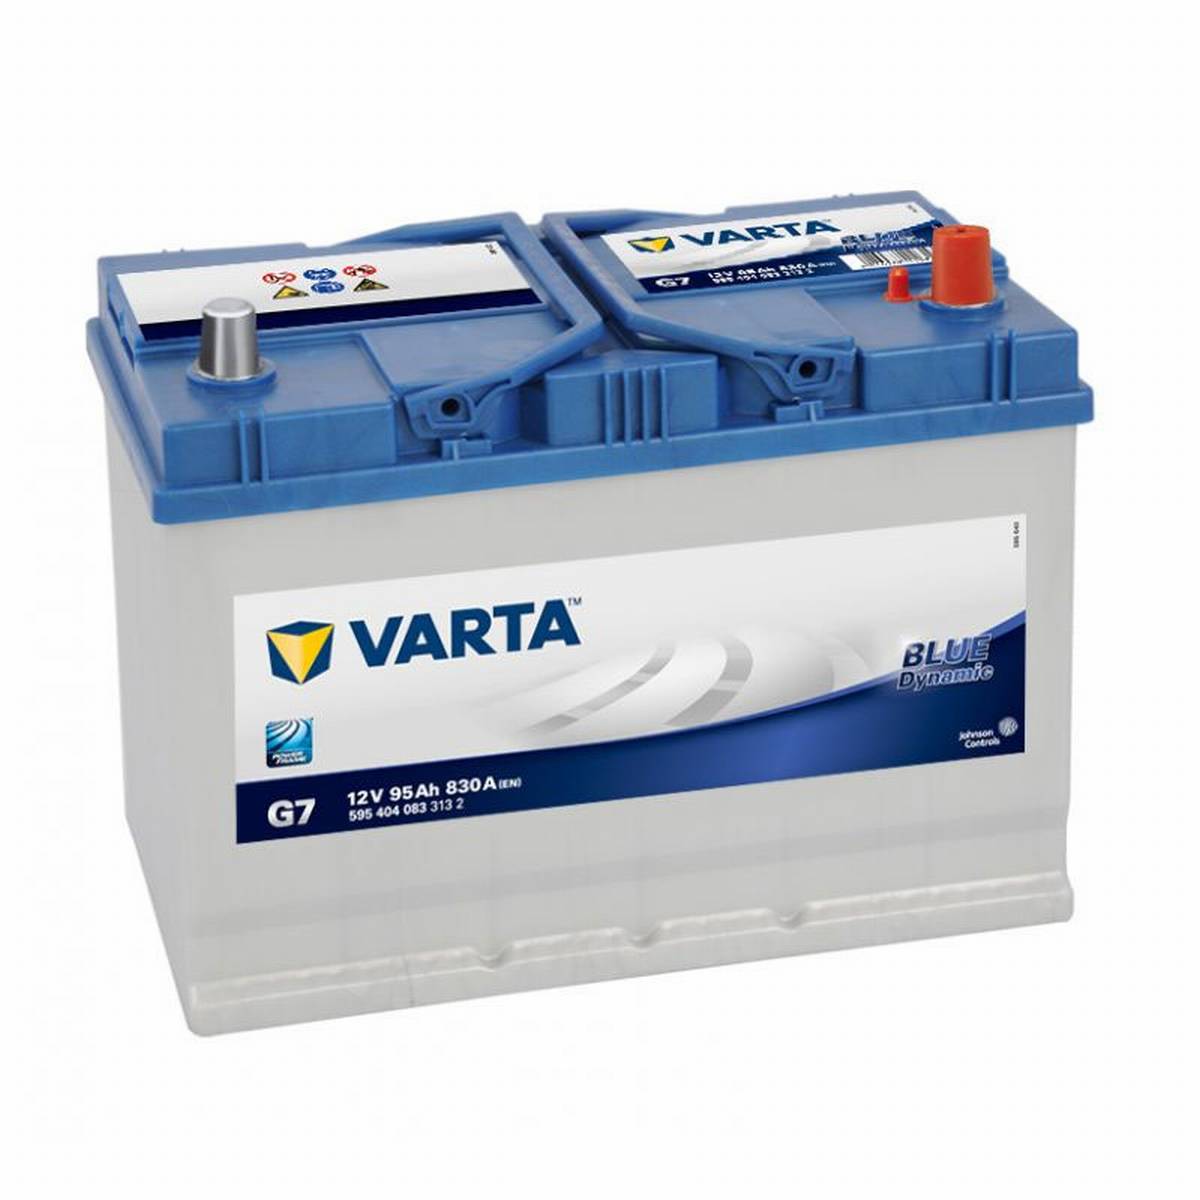 VARTA G7 Blue Dynamic 12V 95Ah 830A Batteria auto 595 404 083